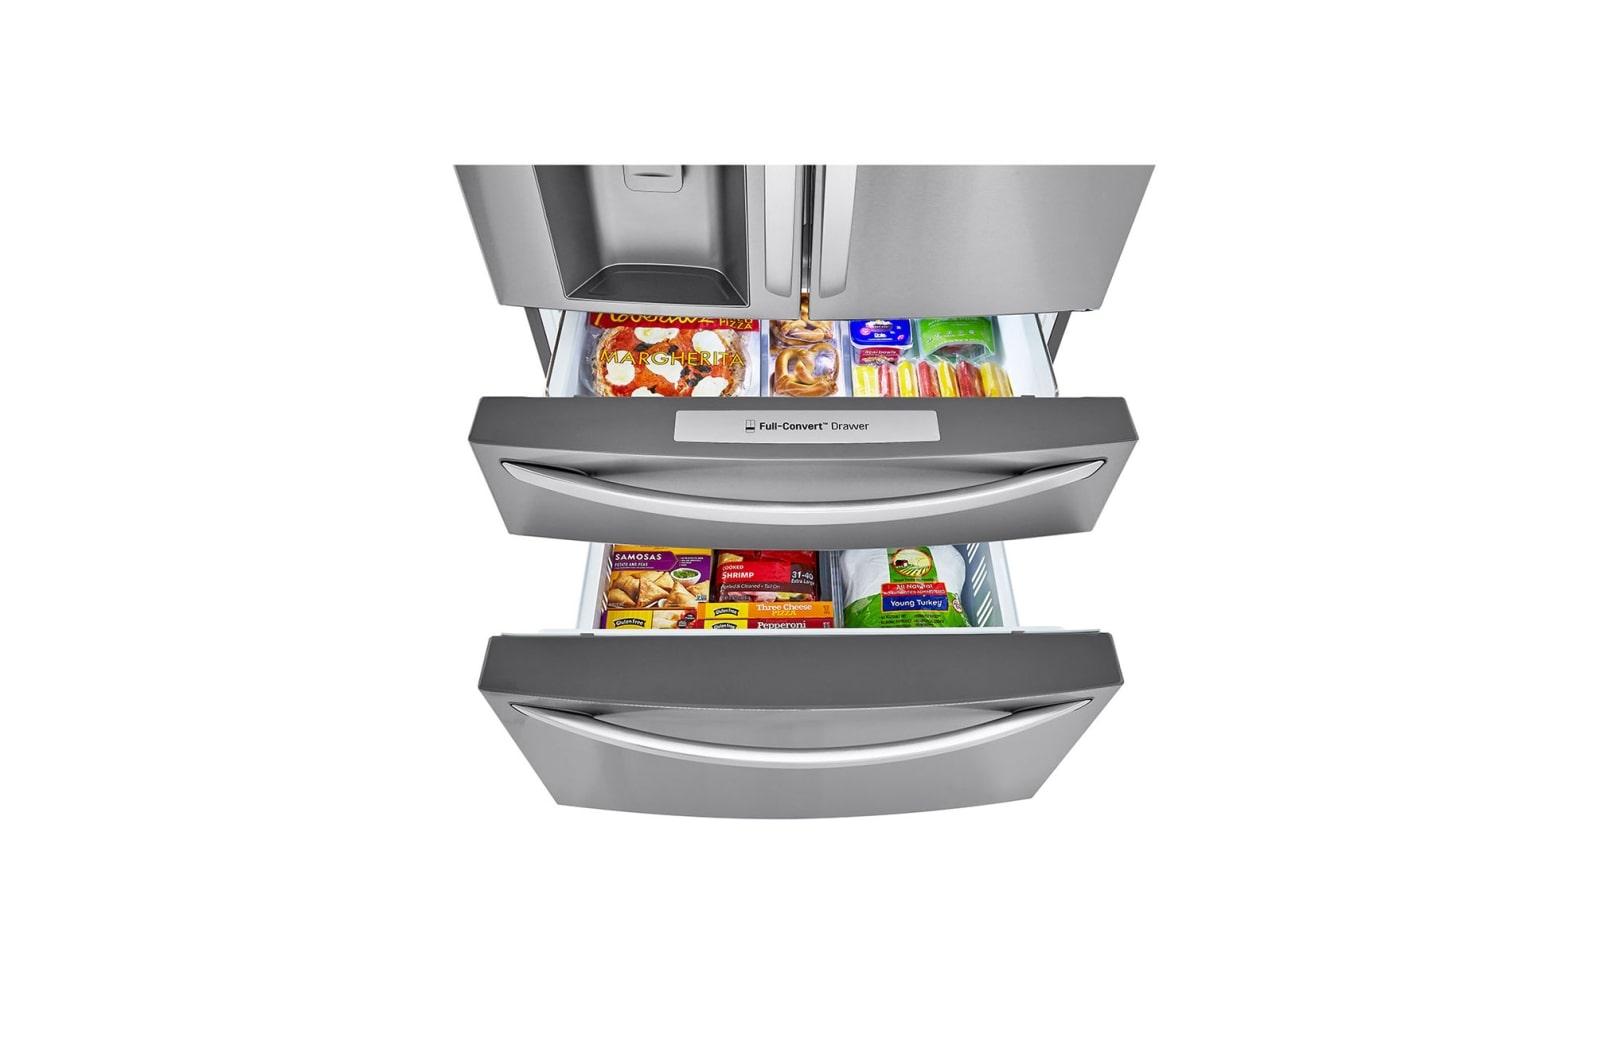 Lg 23 cu. ft. Smart Counter-Depth Refrigerator with Craft Ice™